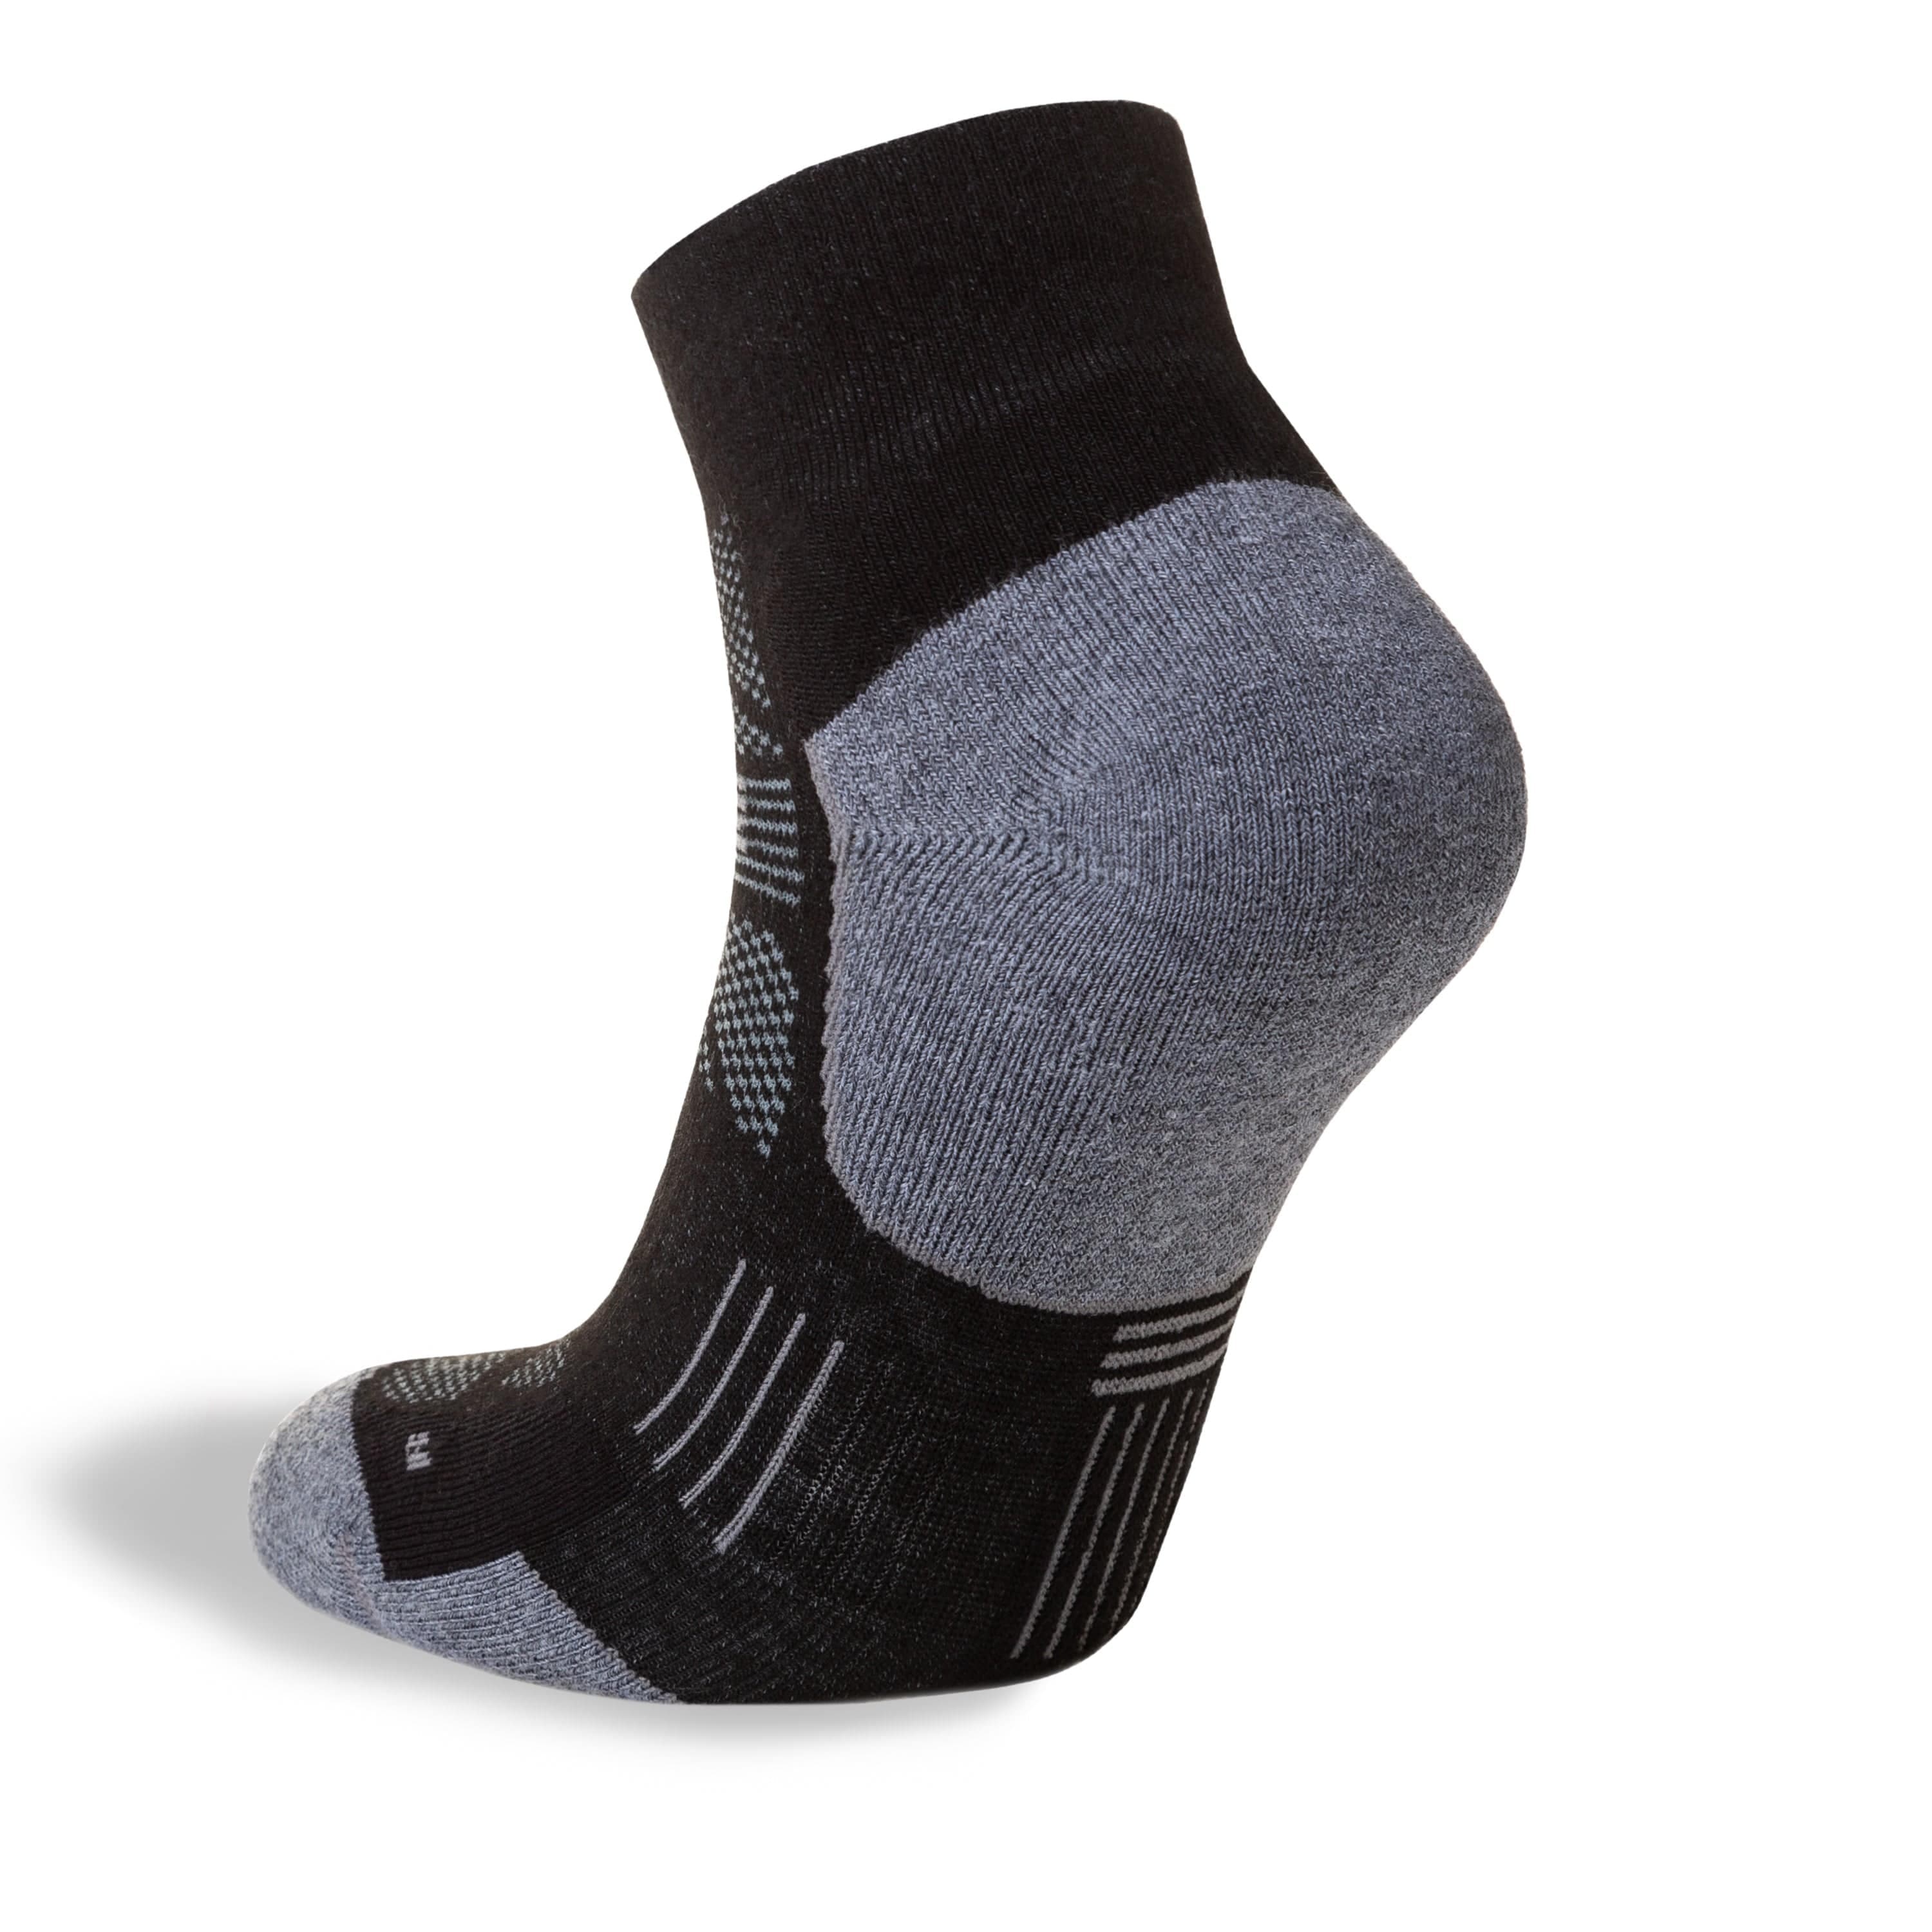 Hilly Supreme Anklet - Medium Cushioning - Black/Grey Marl